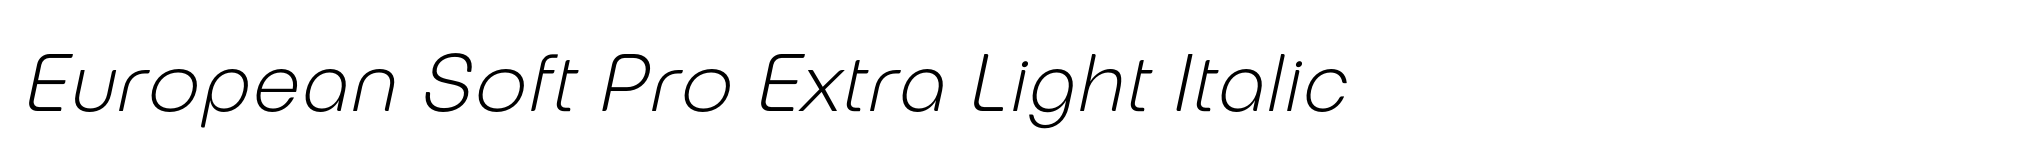 European Soft Pro Extra Light Italic image